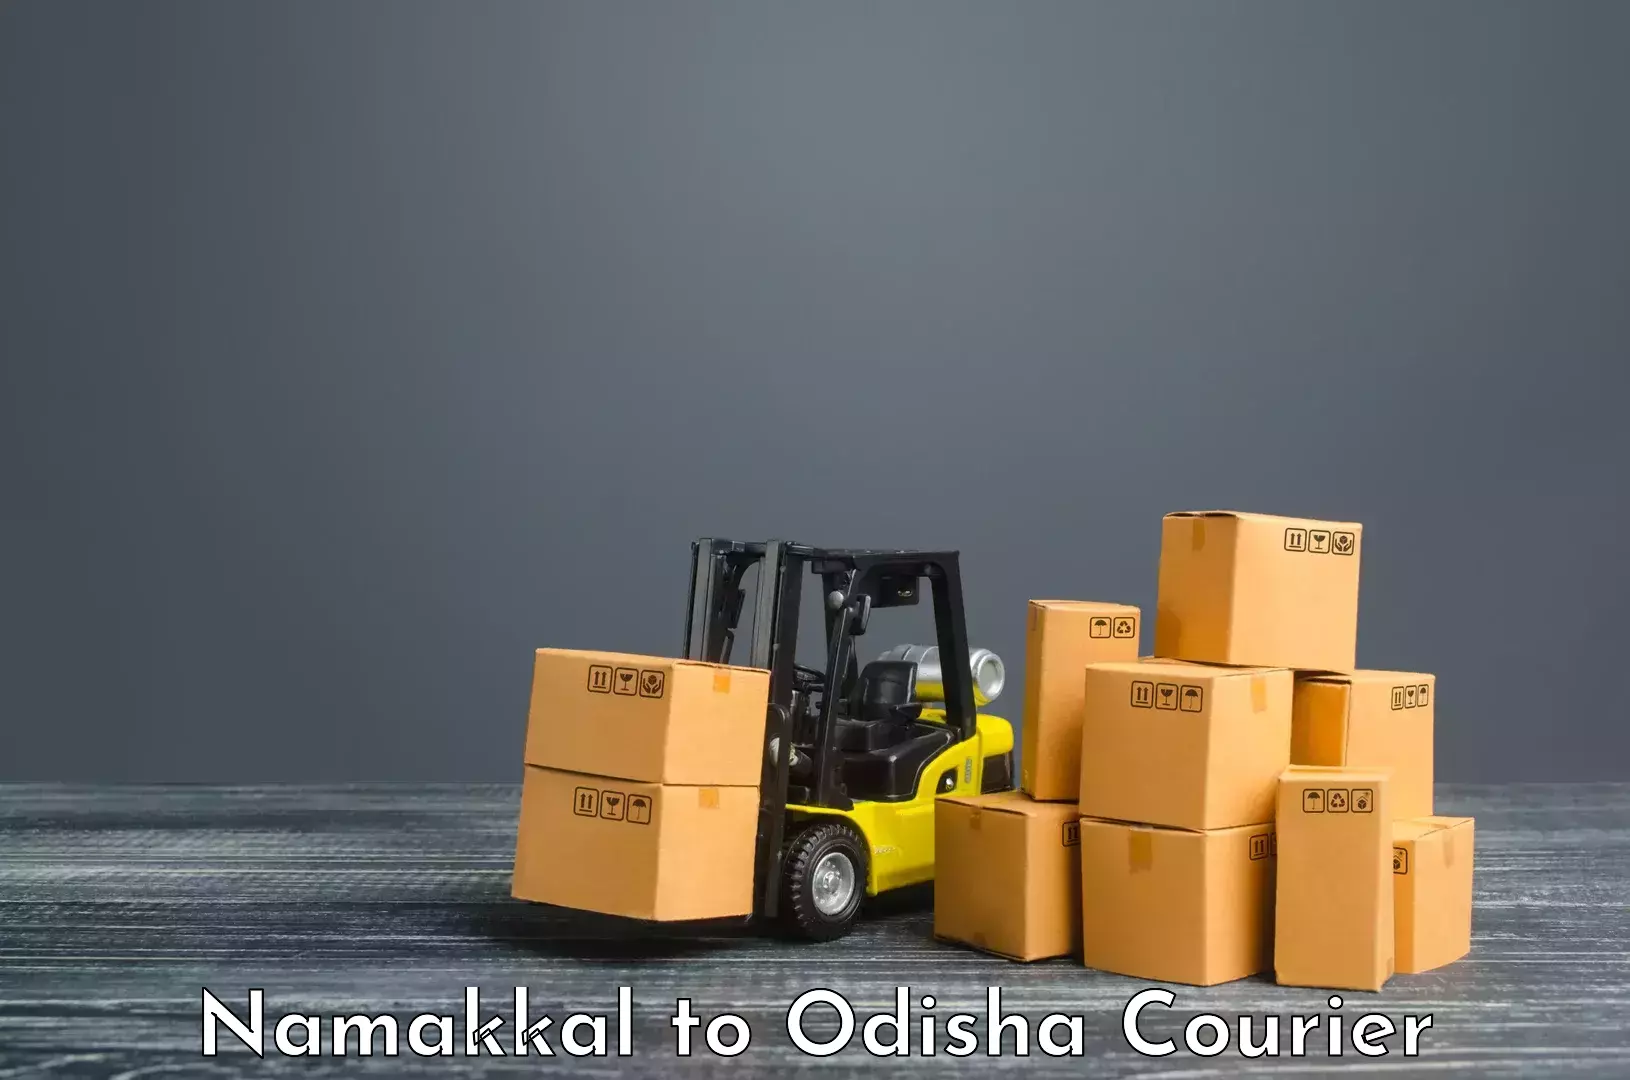 Global shipping networks Namakkal to Gunupur